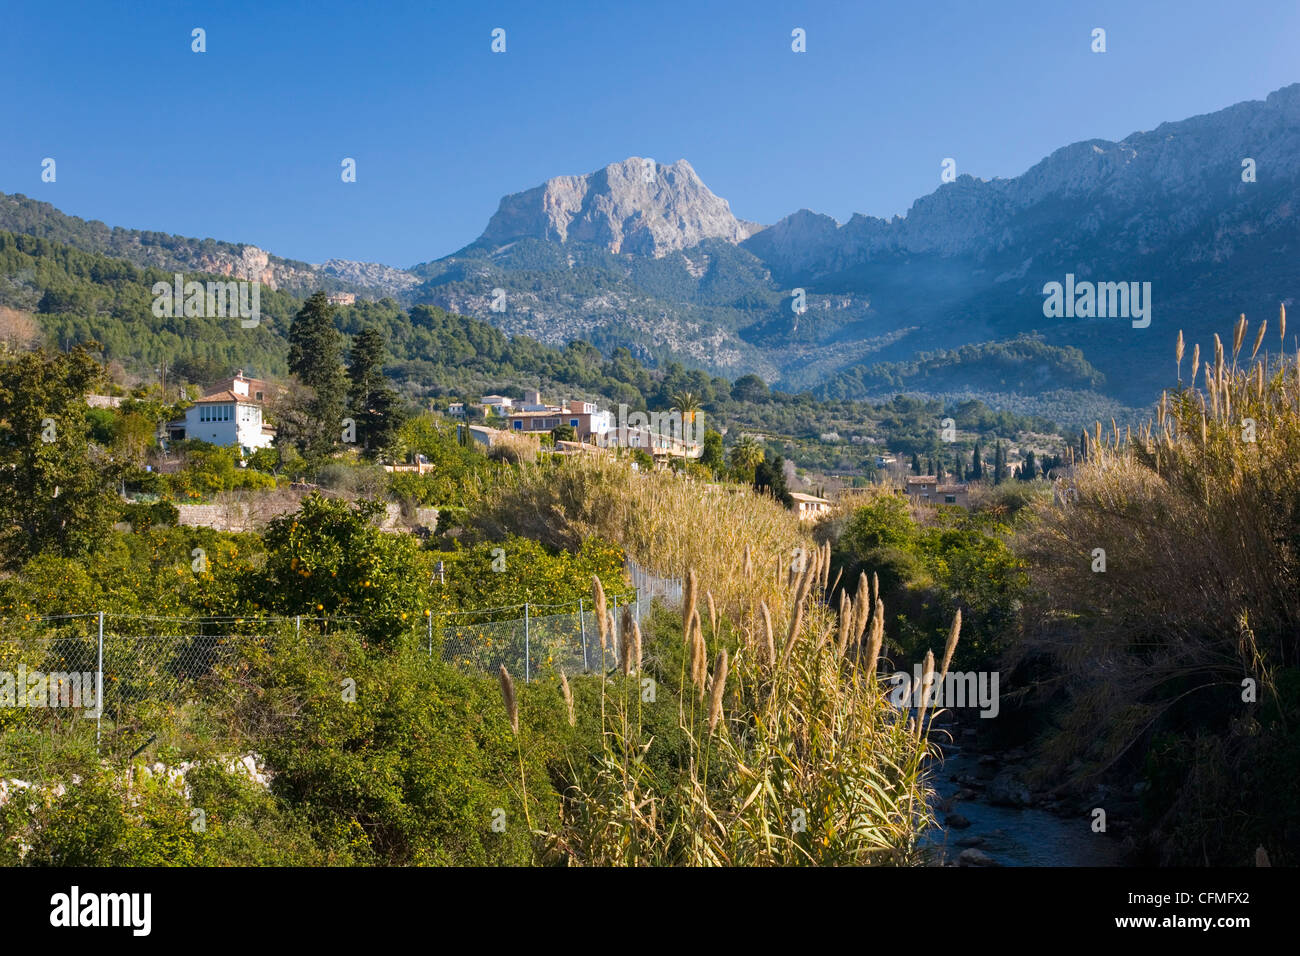 Anzeigen, fruchtbaren Tal, Puig Major, der höchste Gipfel der Insel, Soller, Mallorca, Balearen, Spanien, Europa Stockfoto